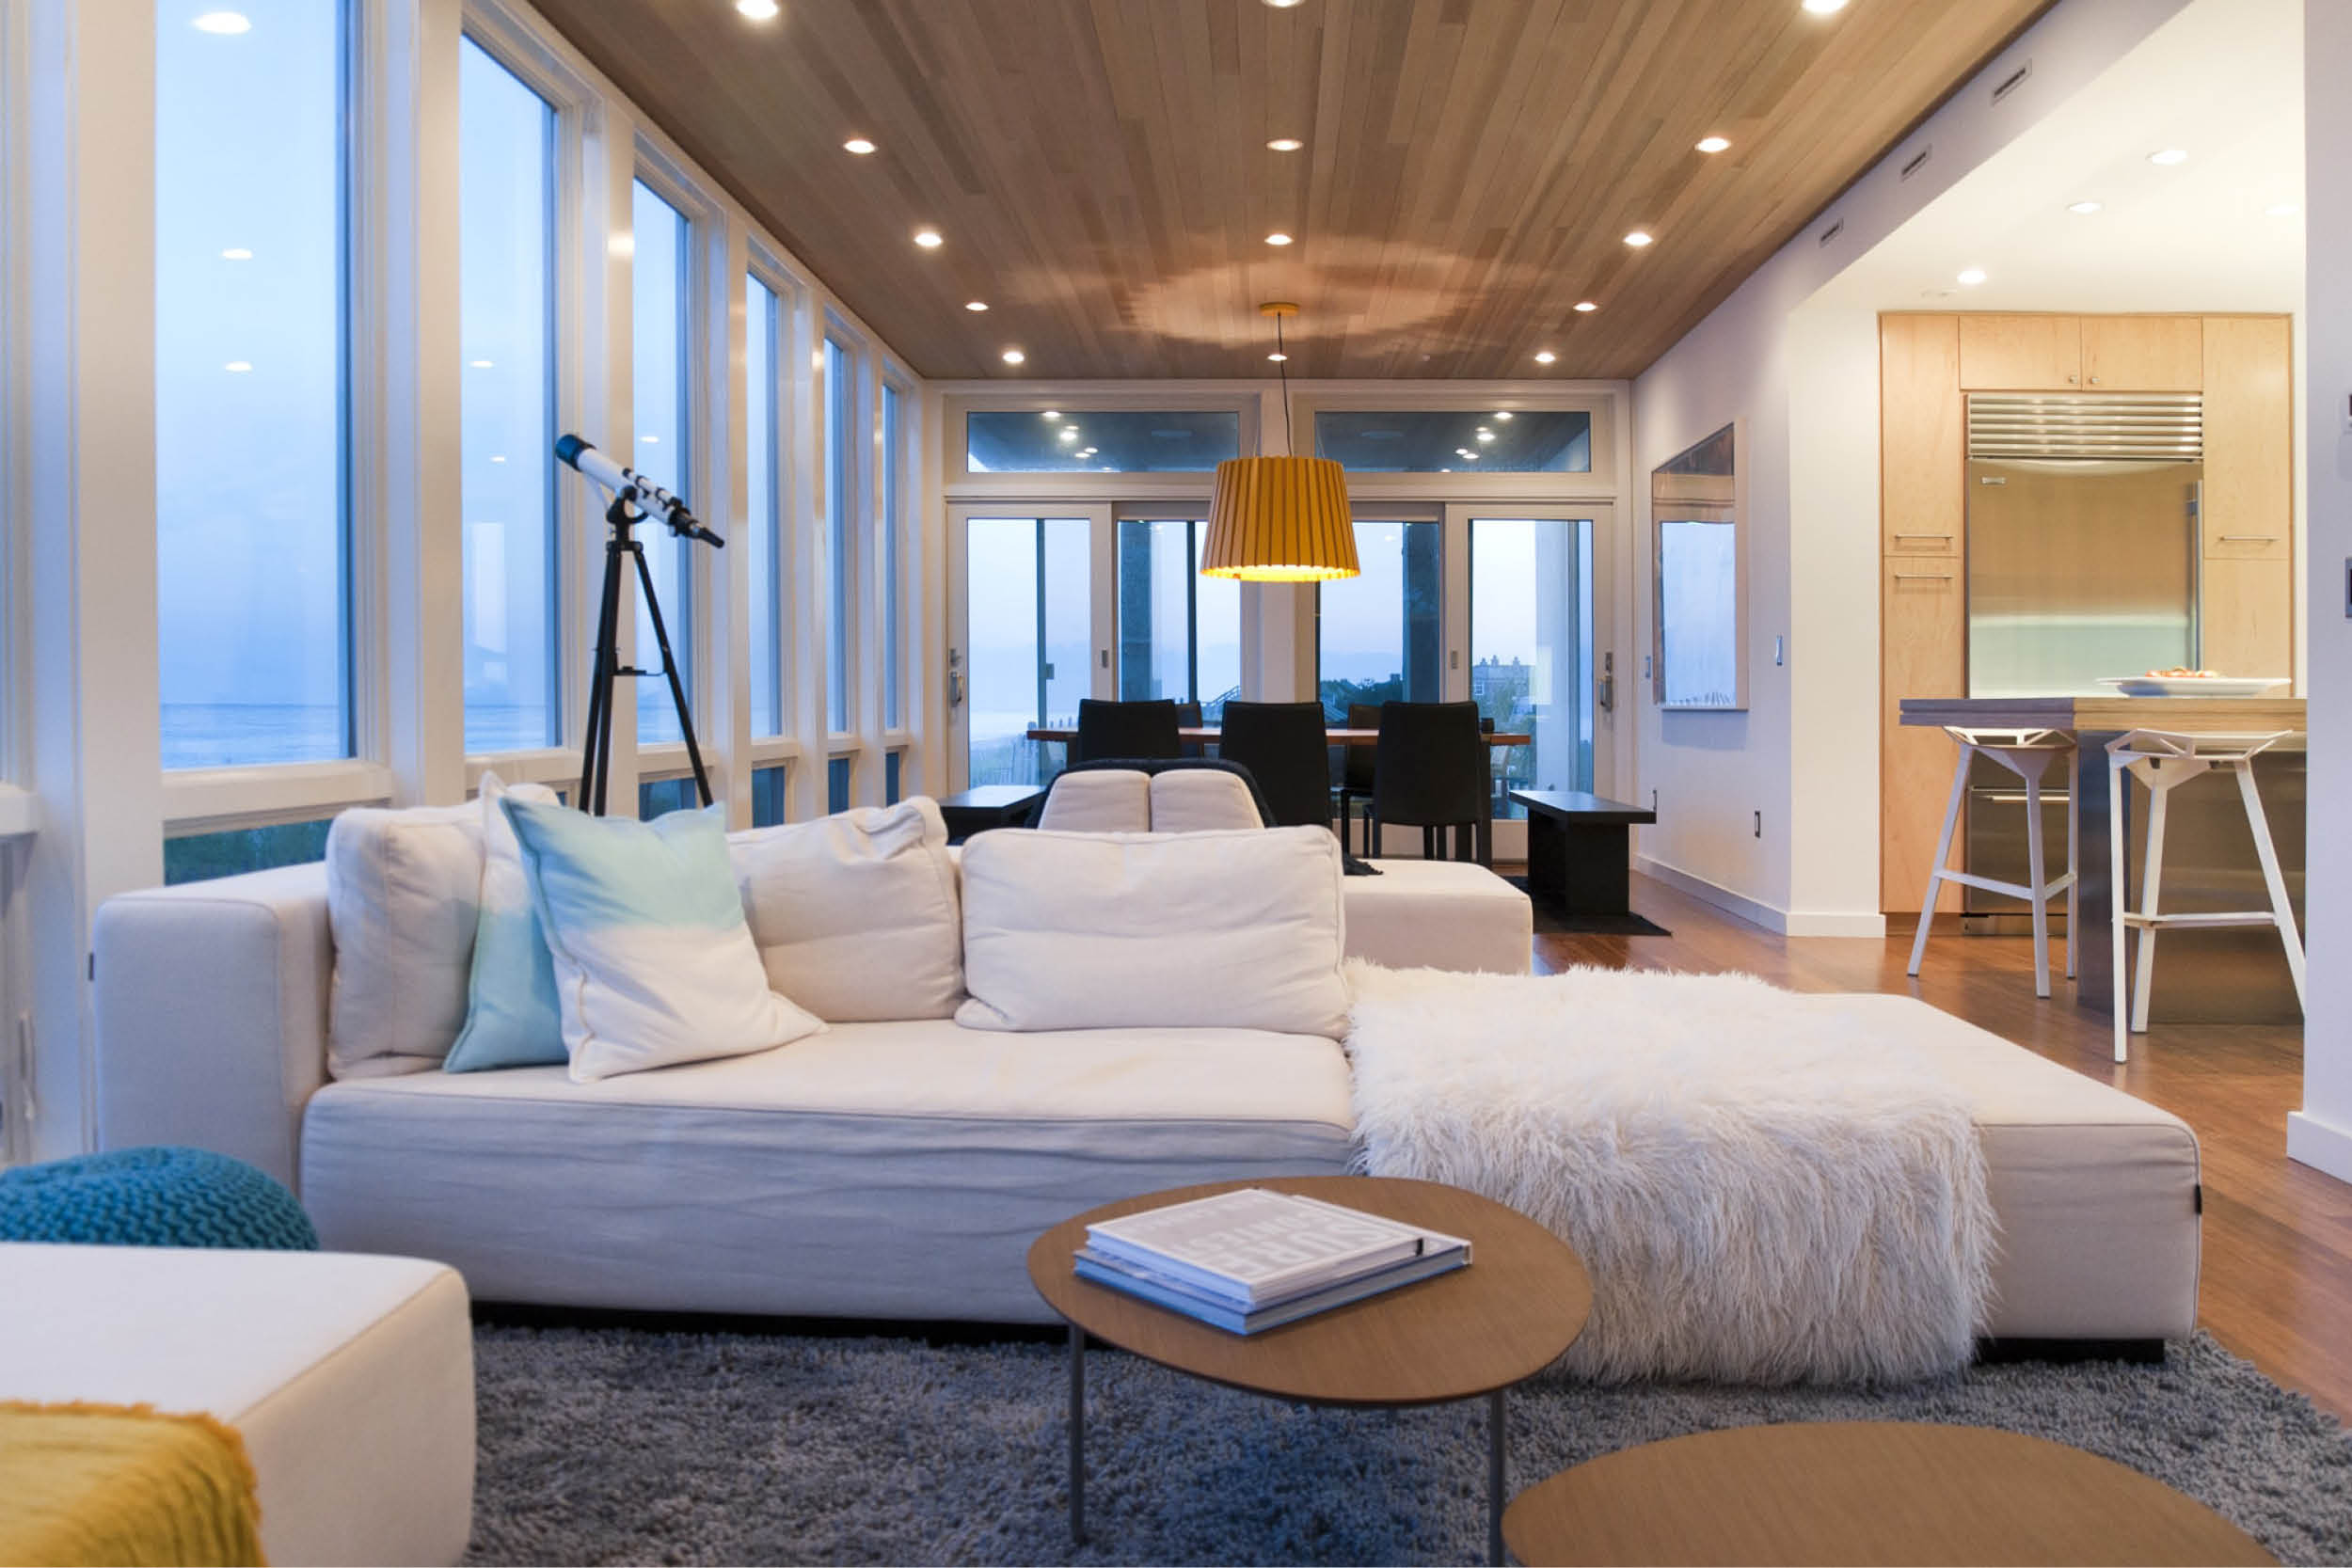 09-res4-resolution-4-architecture-modern-modular-home-prefab-dune-road-beach-house-interior-living-room.jpg